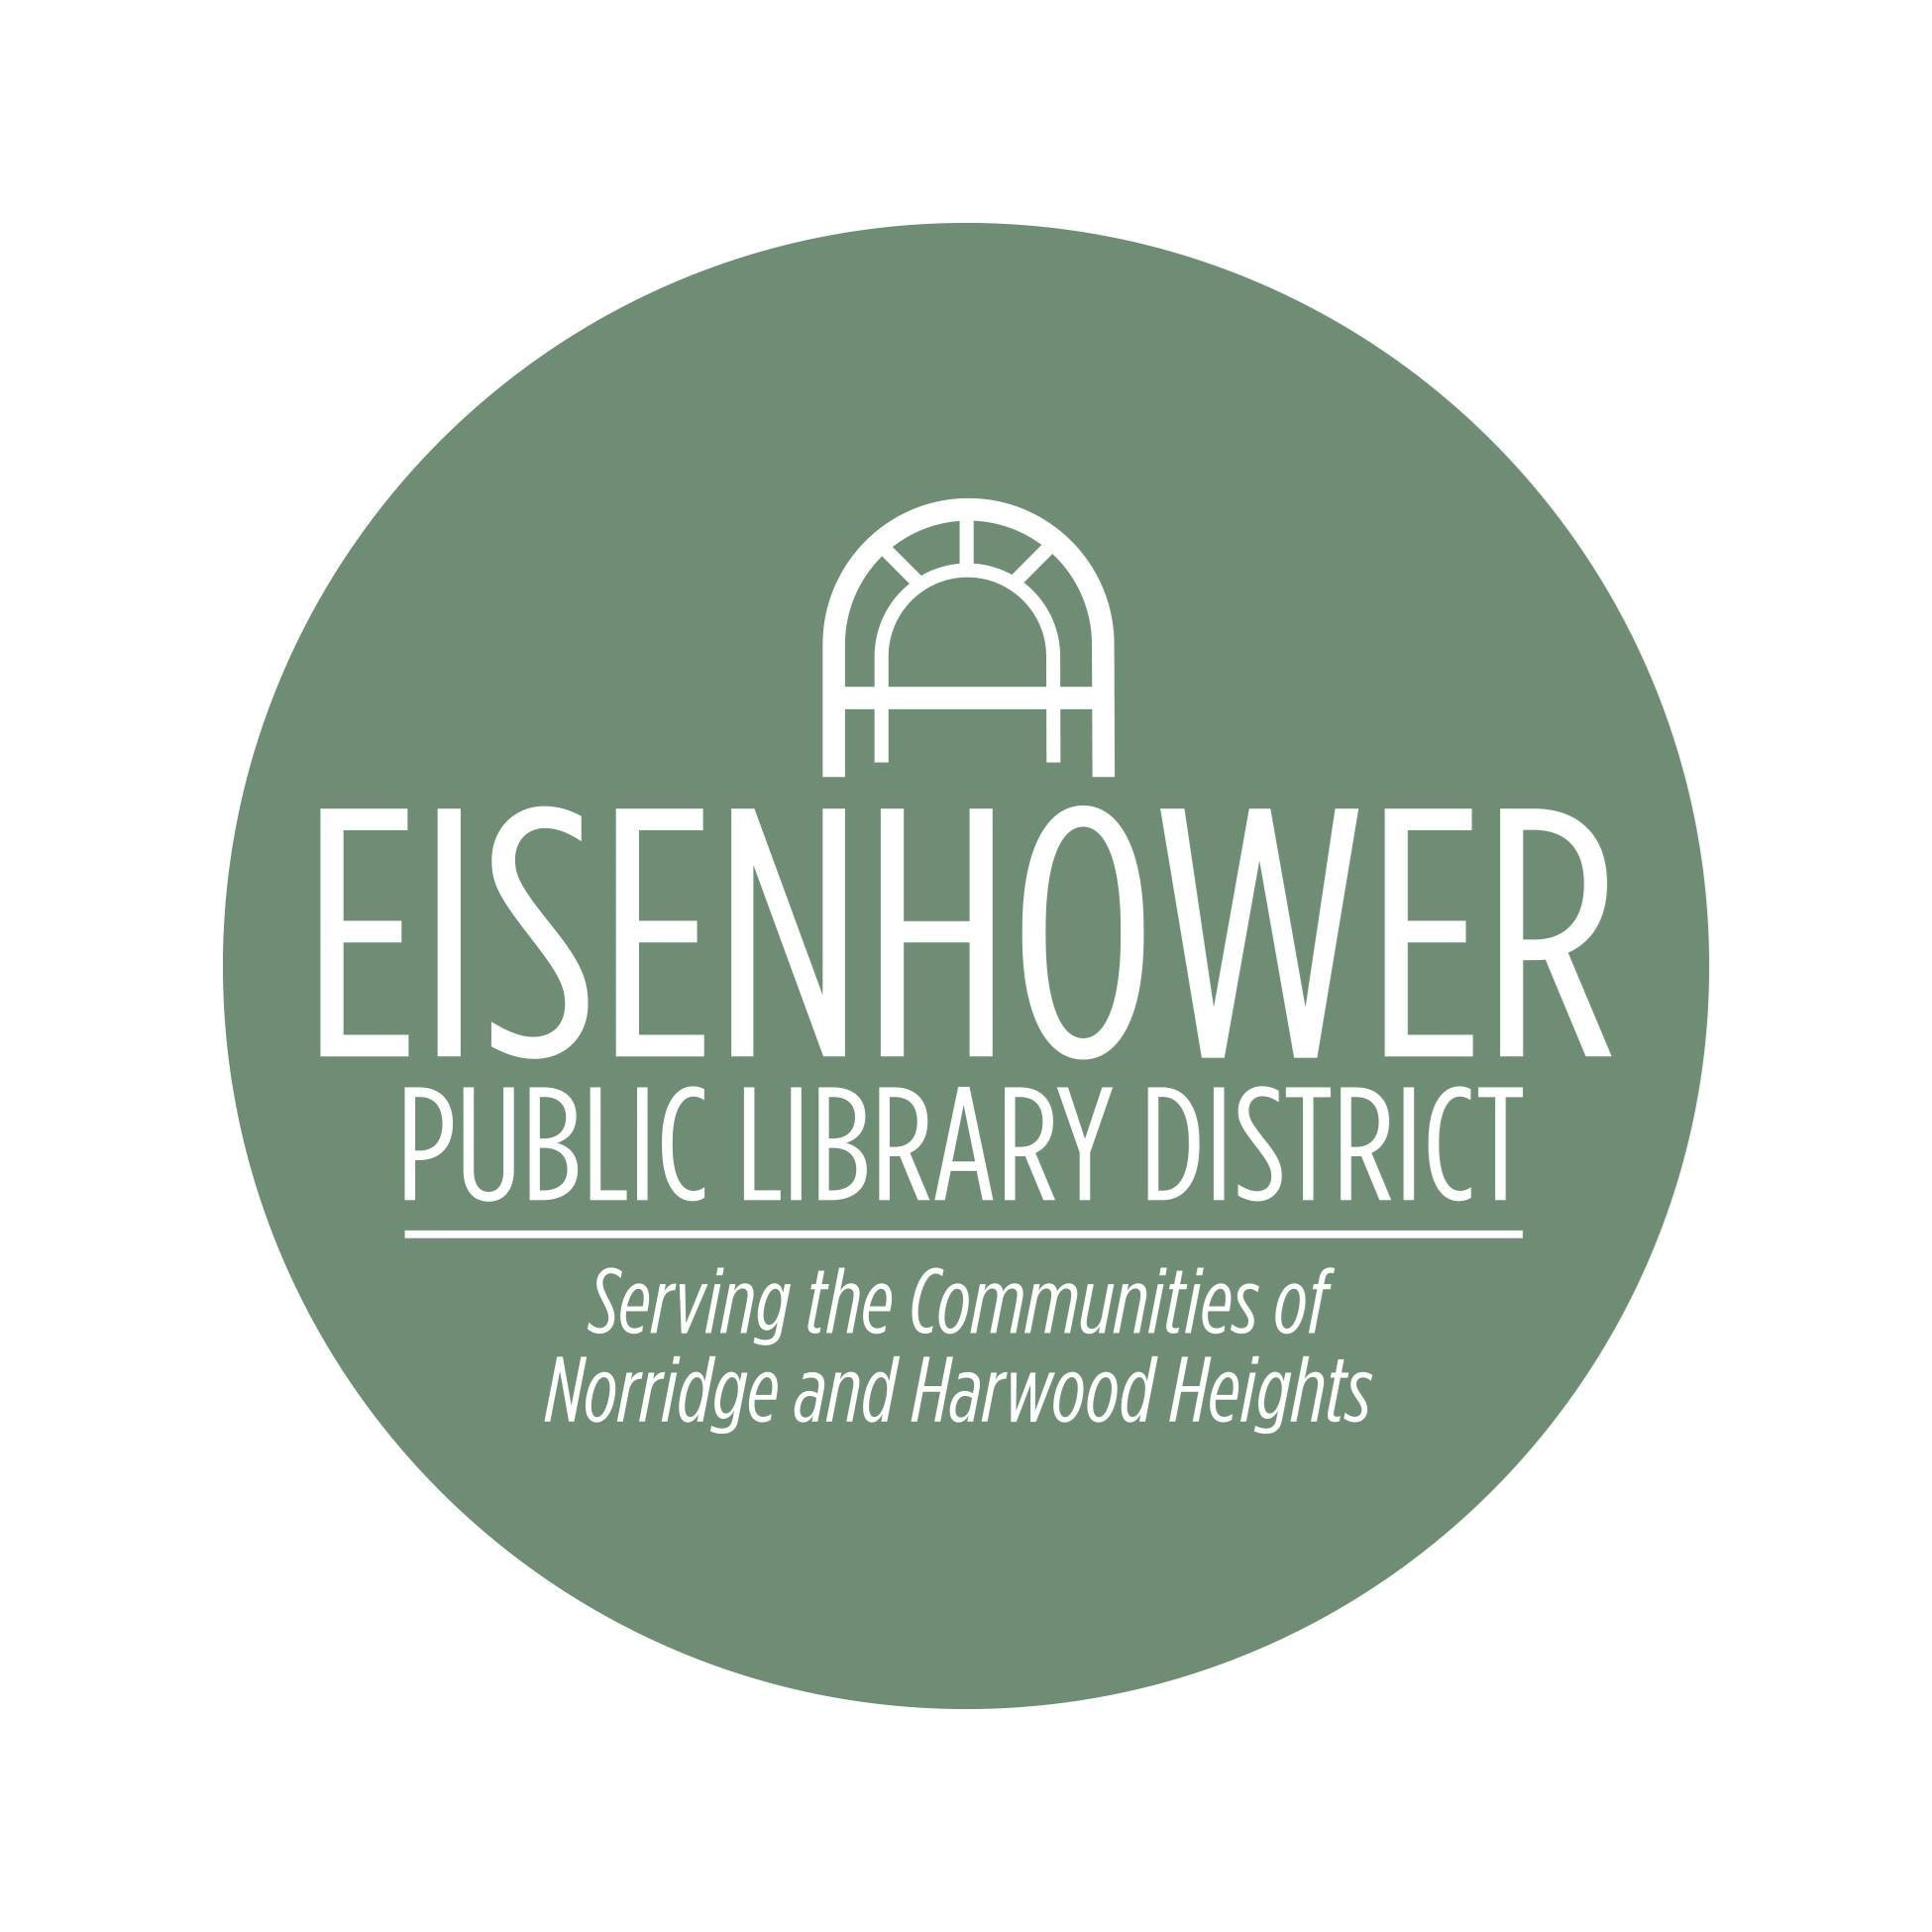 Eisenhower Public Library District